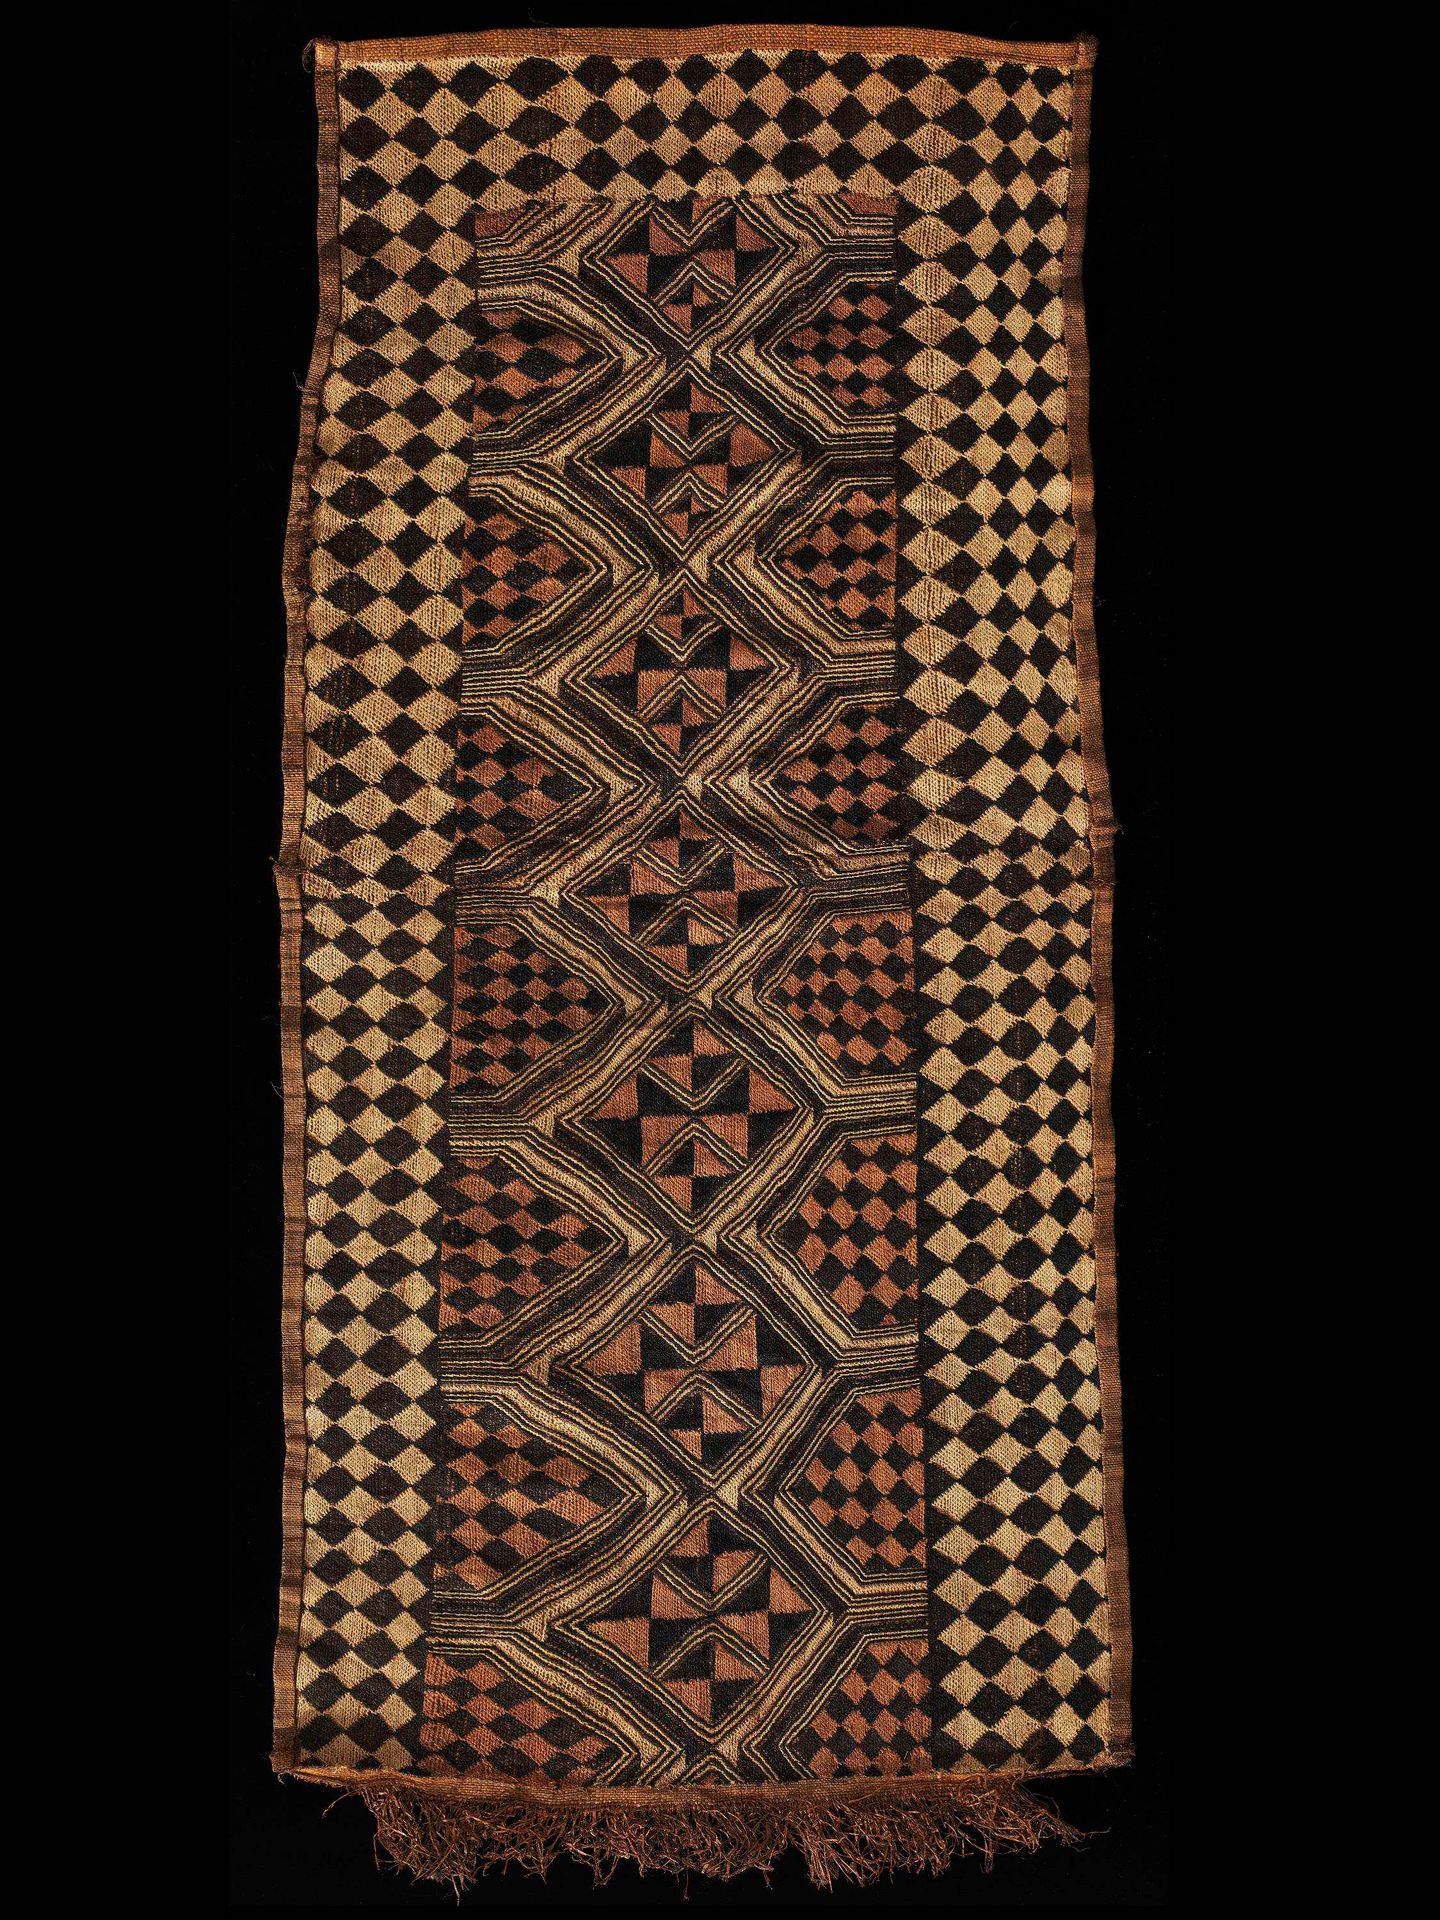 A Kuba Woven Fabric Raphia纺织品
古巴，刚果民主共和国
Ohne Sockel /无底座
Raphia。宽57厘米。长118厘米。
 &hellip;